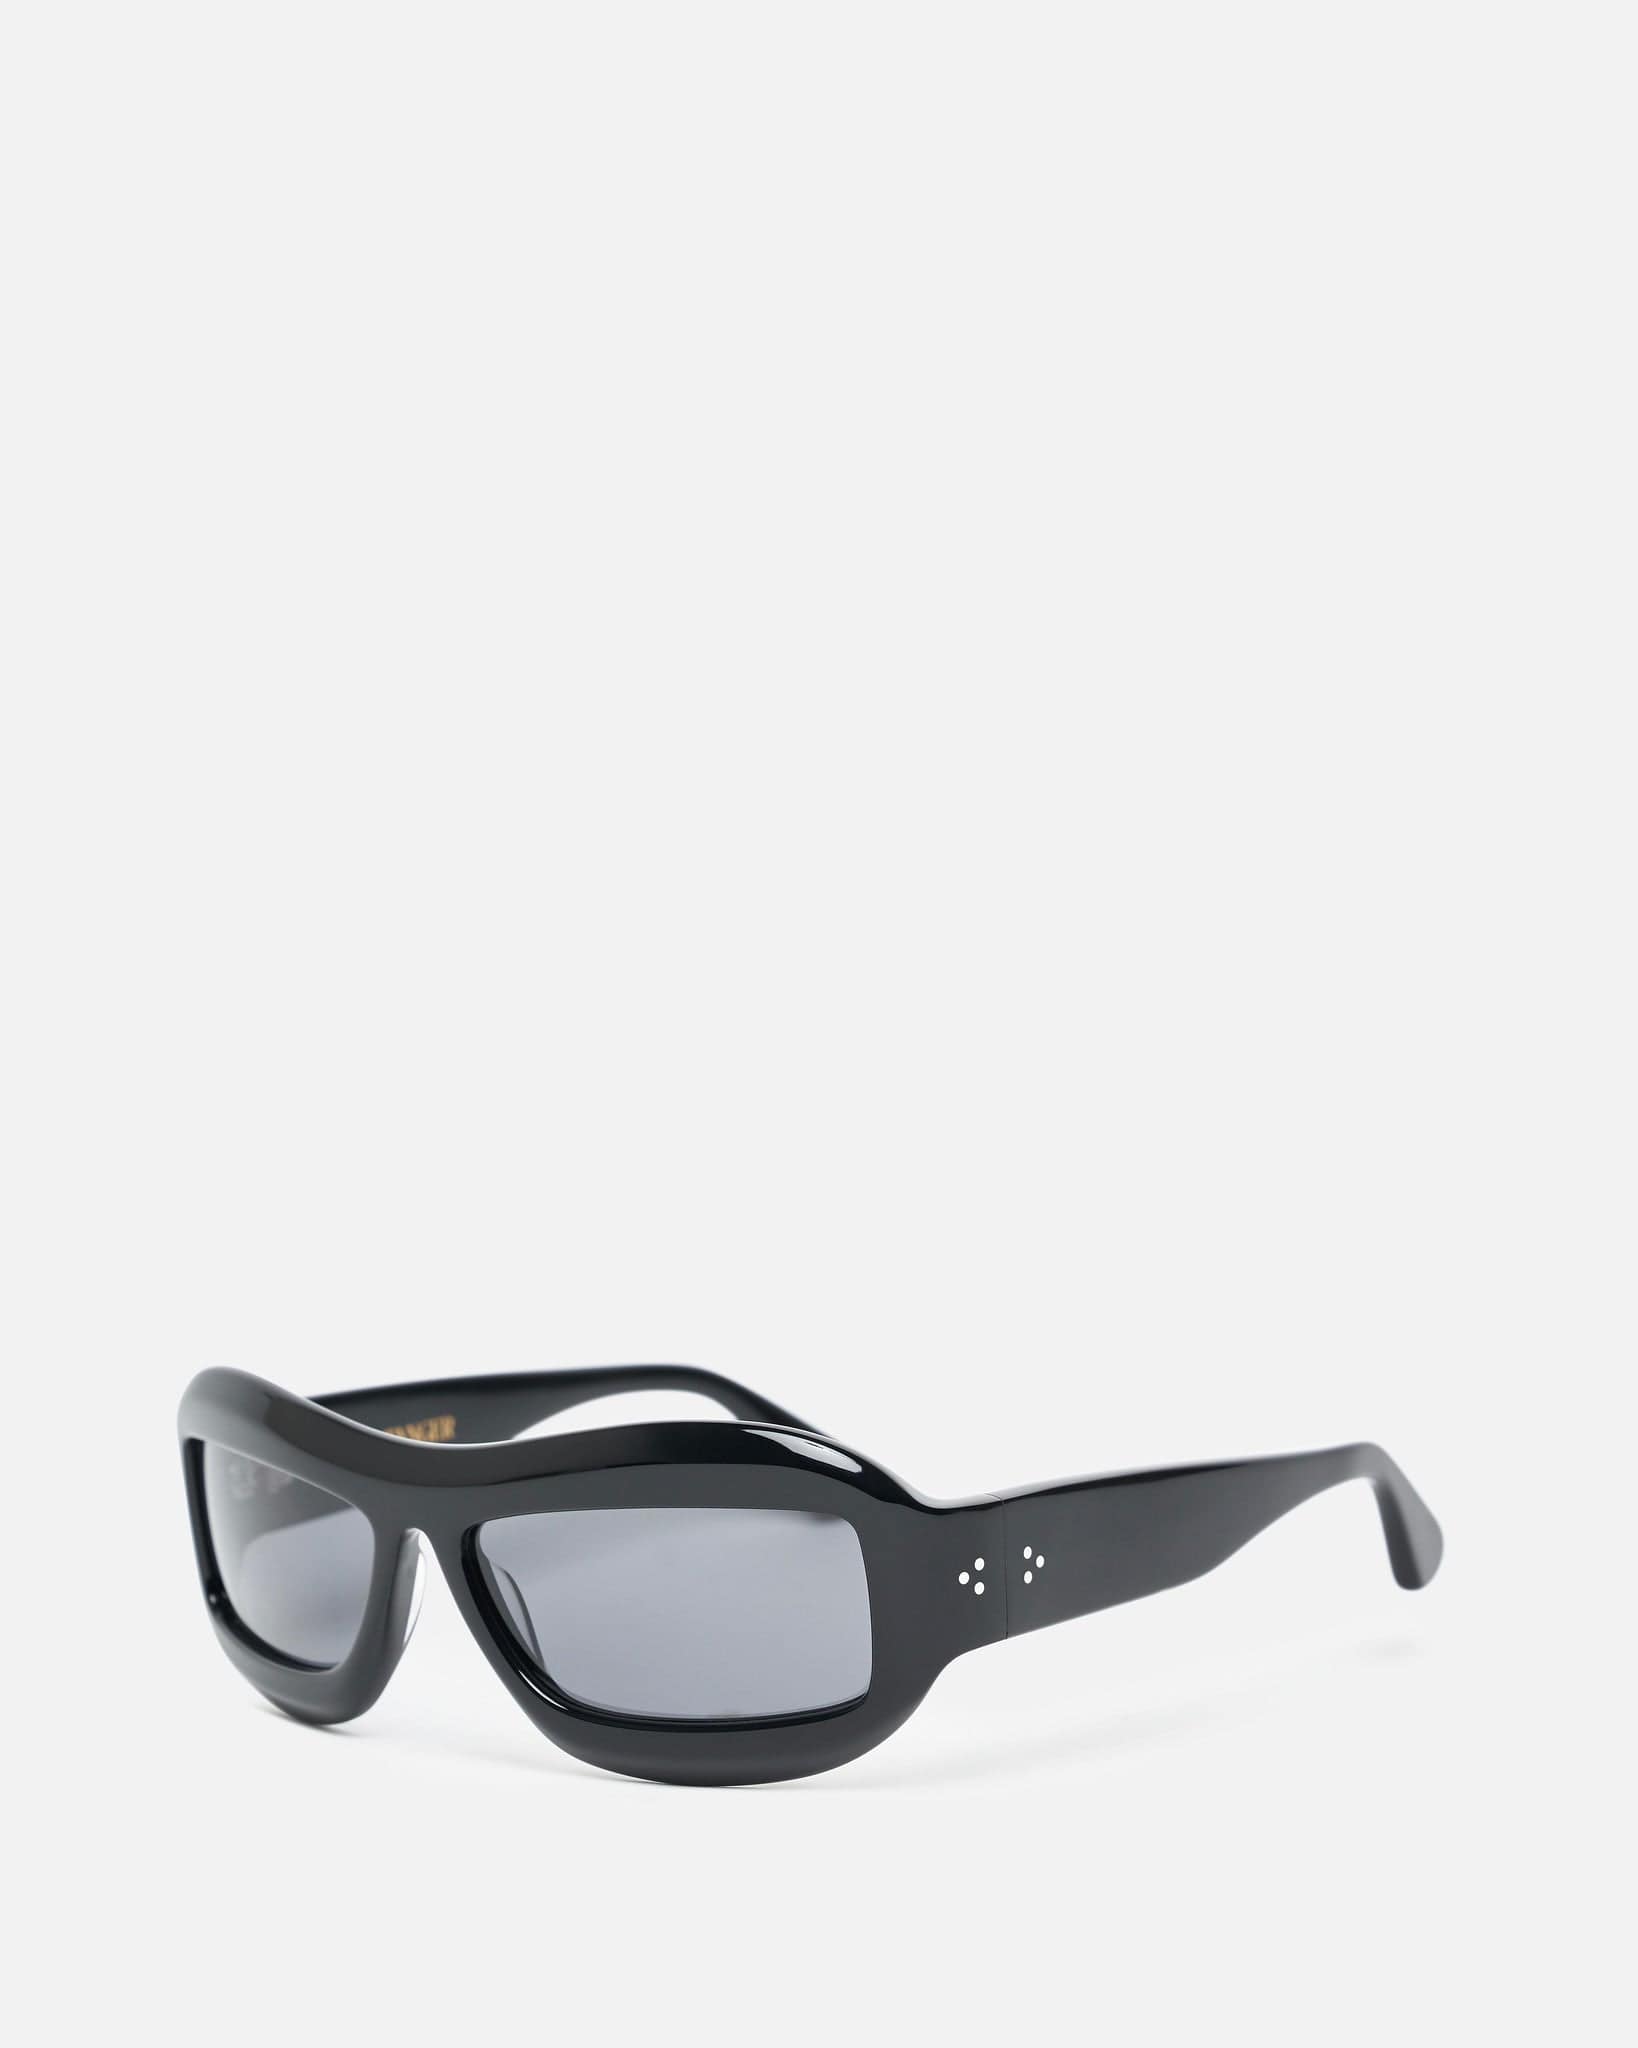 Port Tanger Eyewear O/S Zarin in Black Acetate/Black Lens